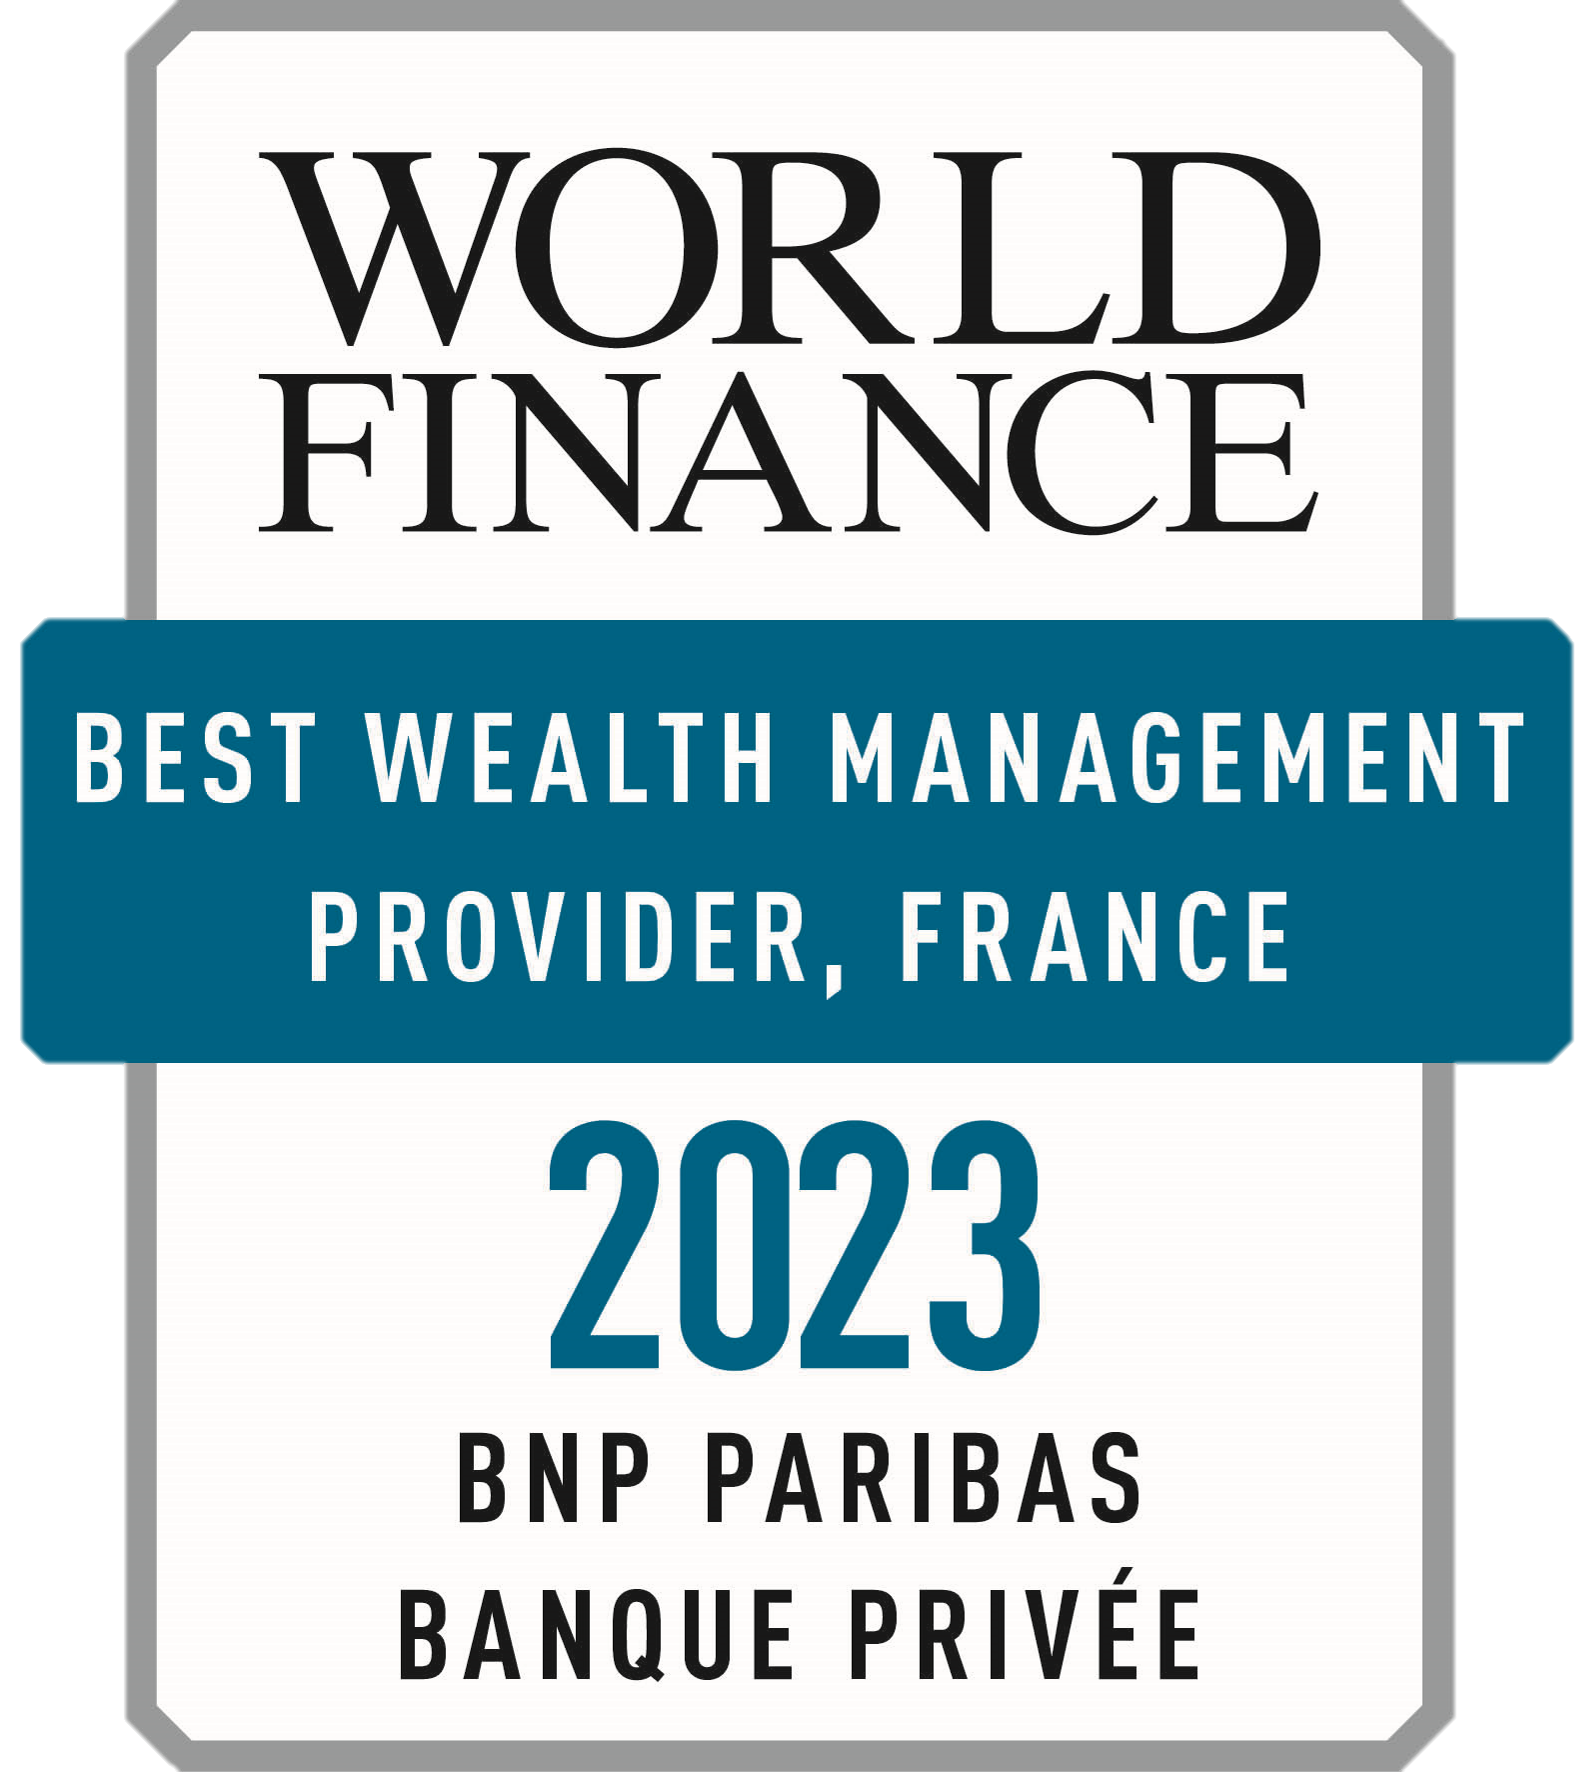 World Finance Best Wealth Management Provider France